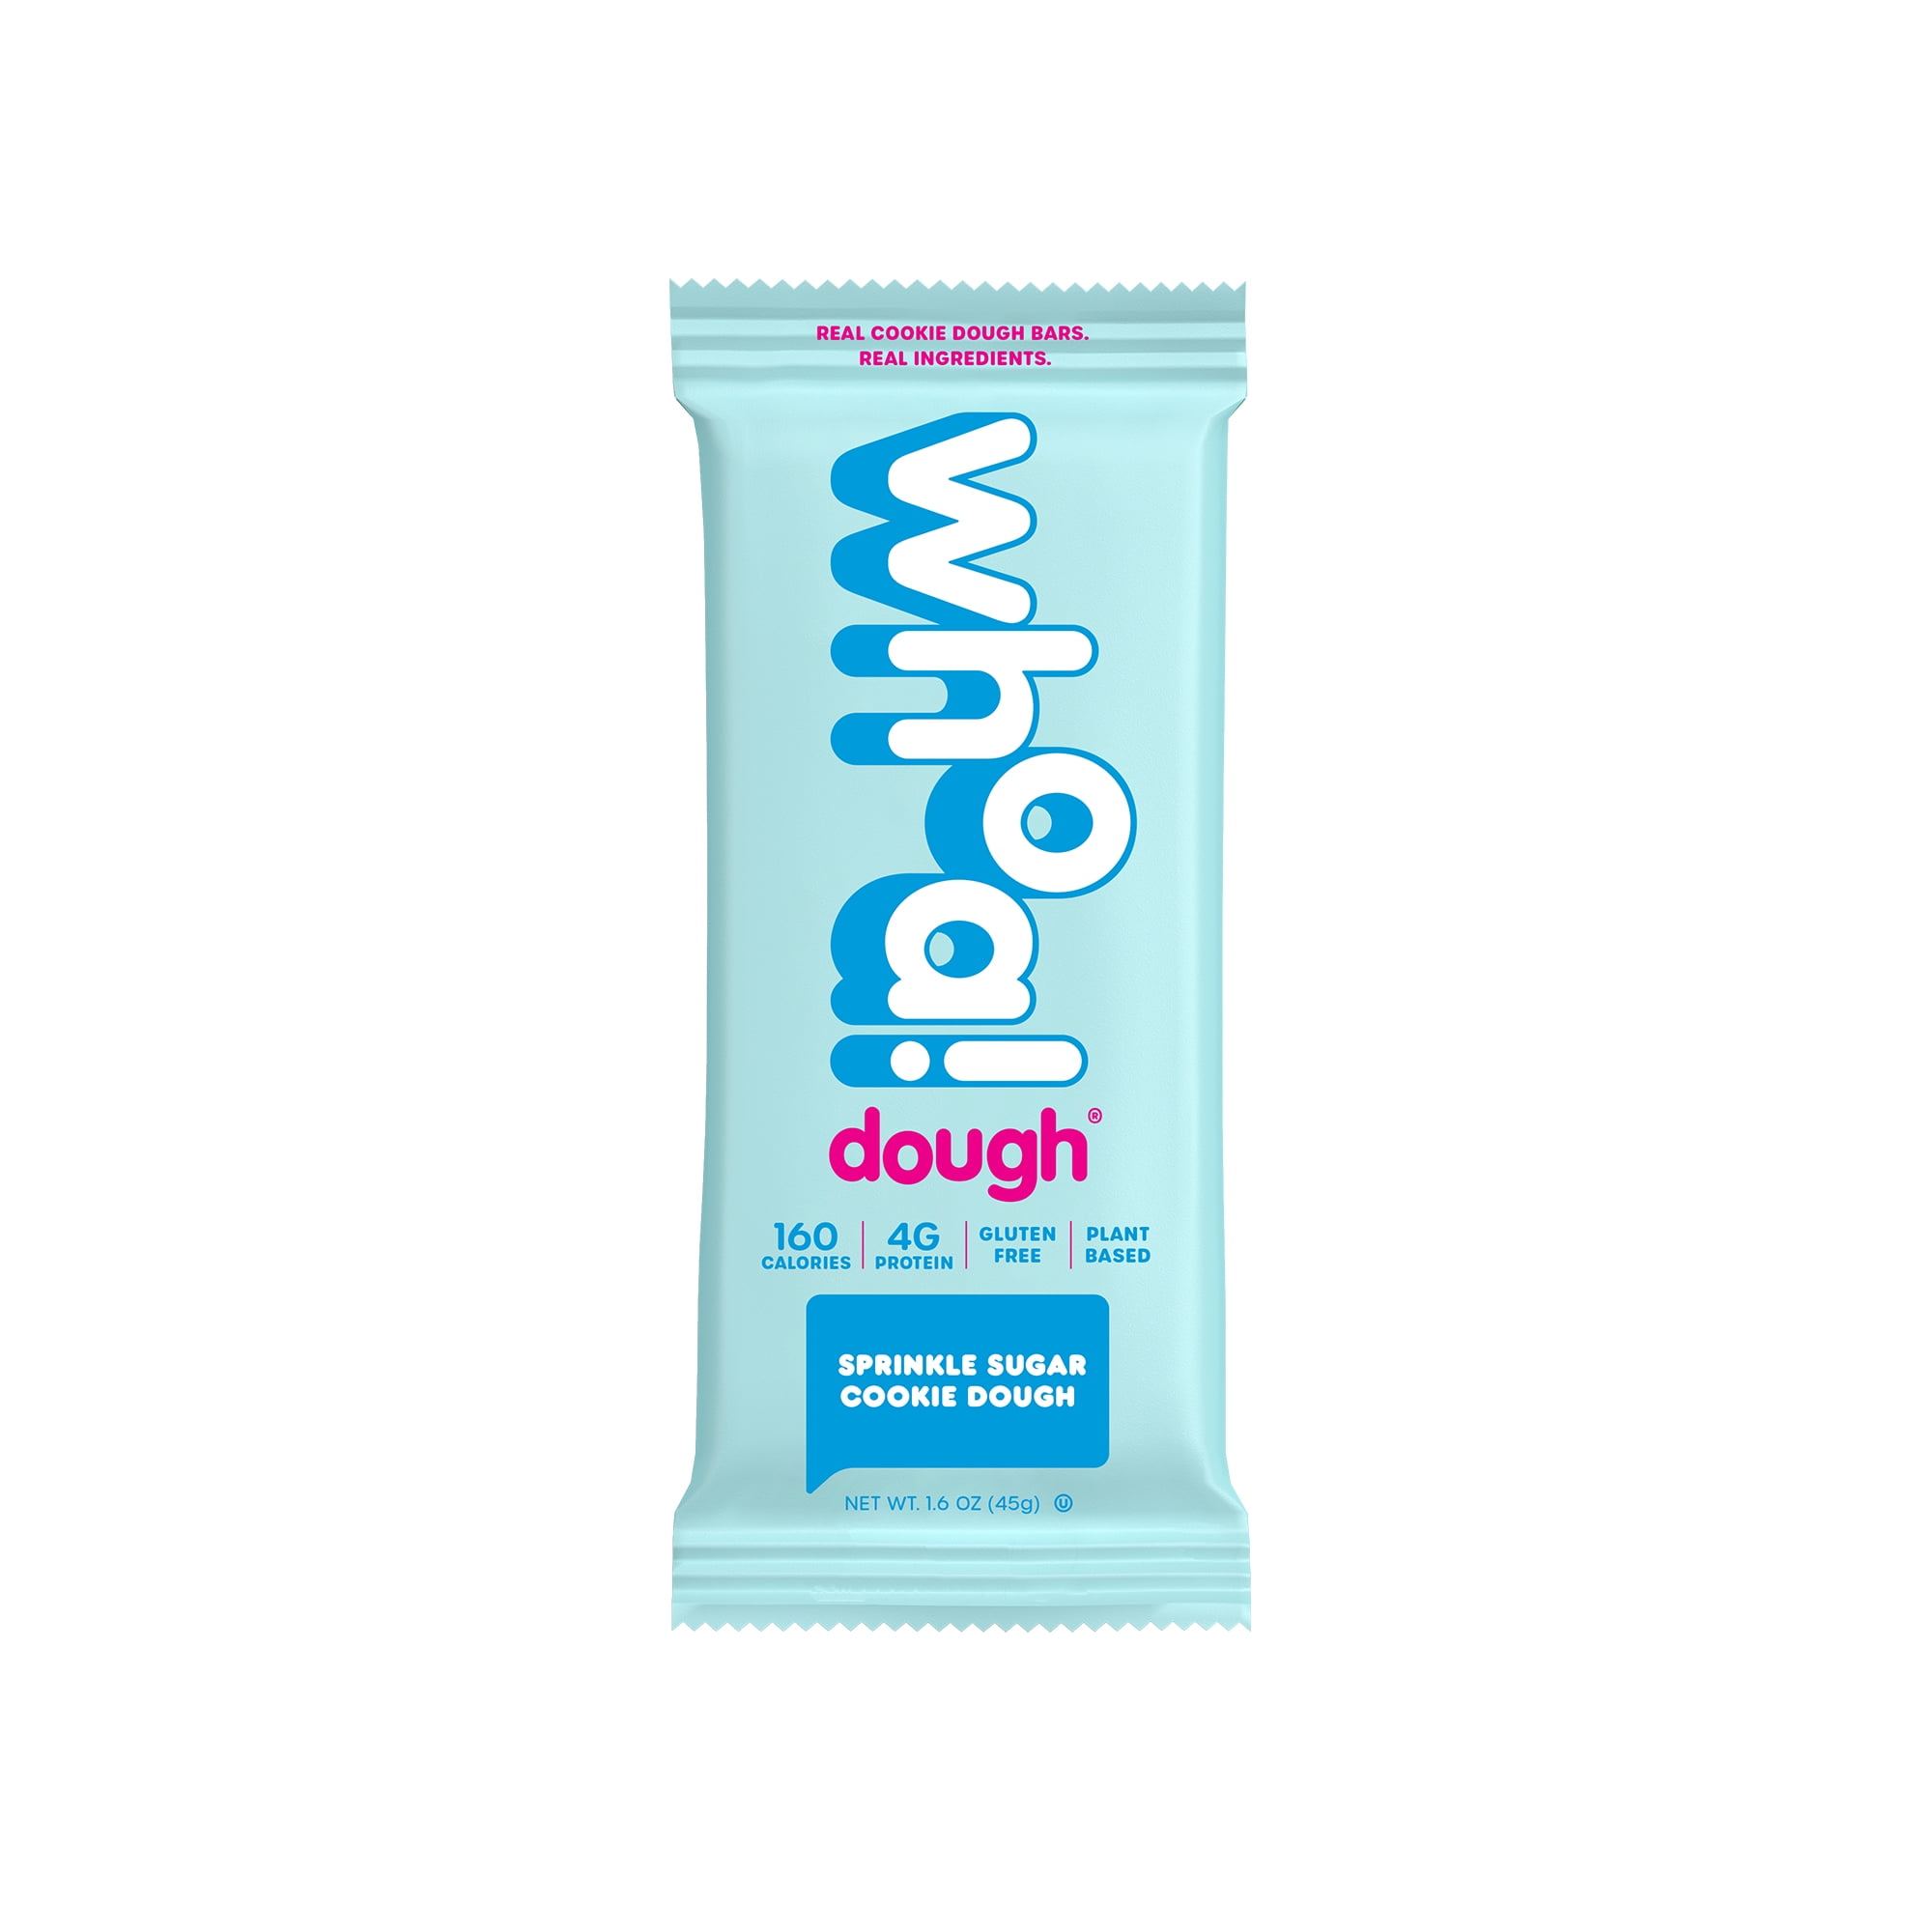 Whoa Dough | Sugar Sprinkle Cookie Dough, 10 Bars